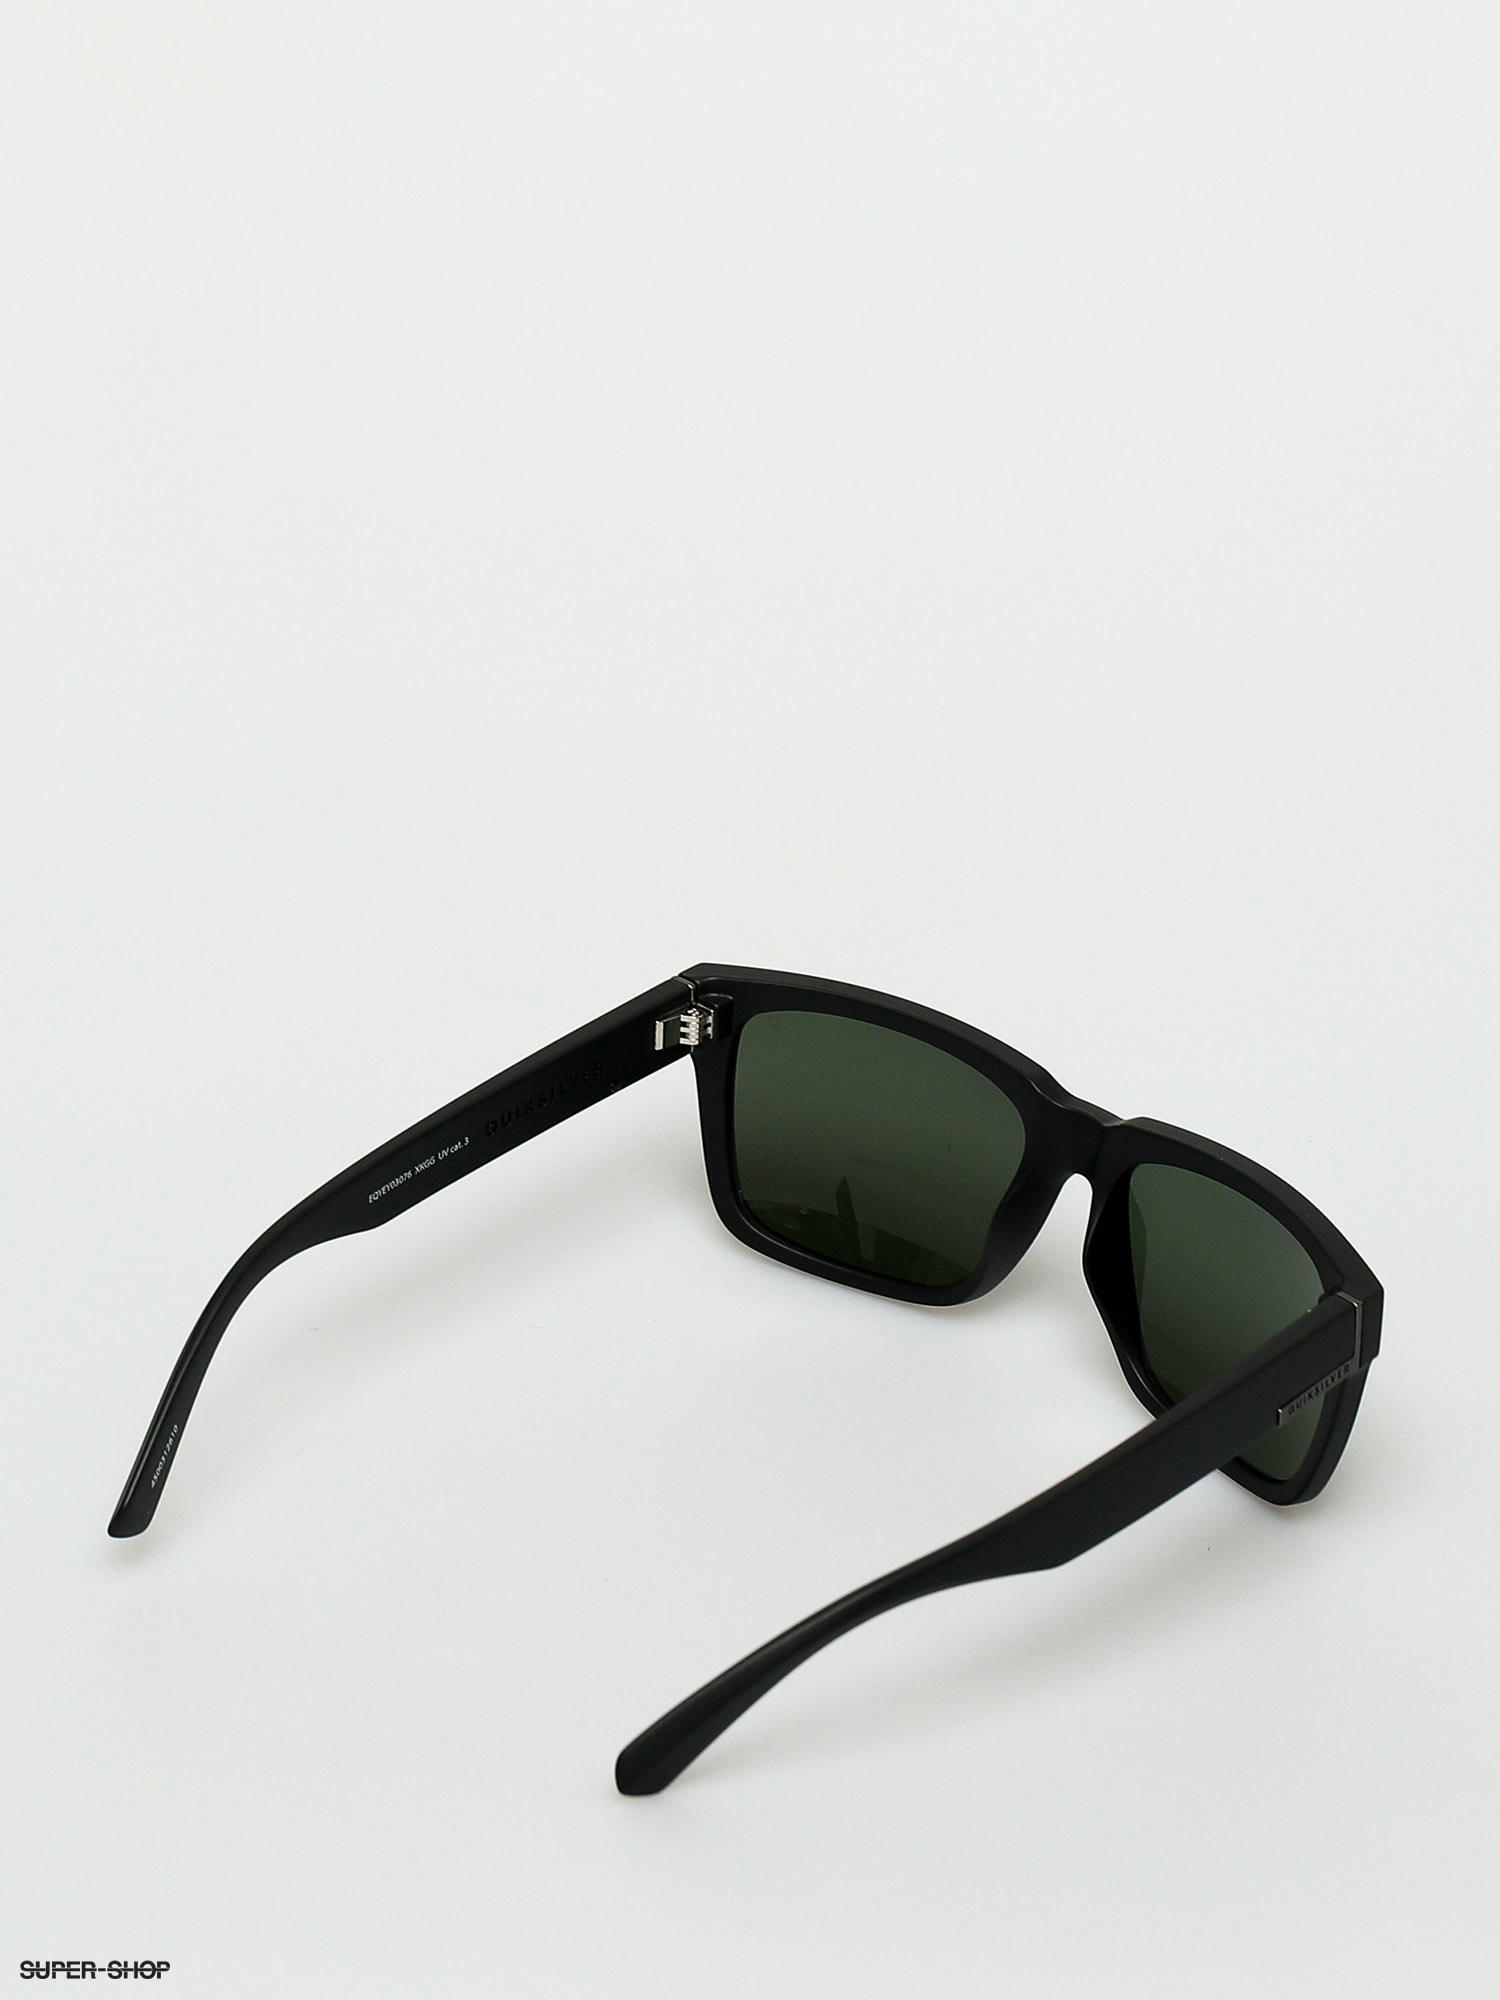 p) Quiksilver Bruiser (matte black/green Polarized Sunglasses